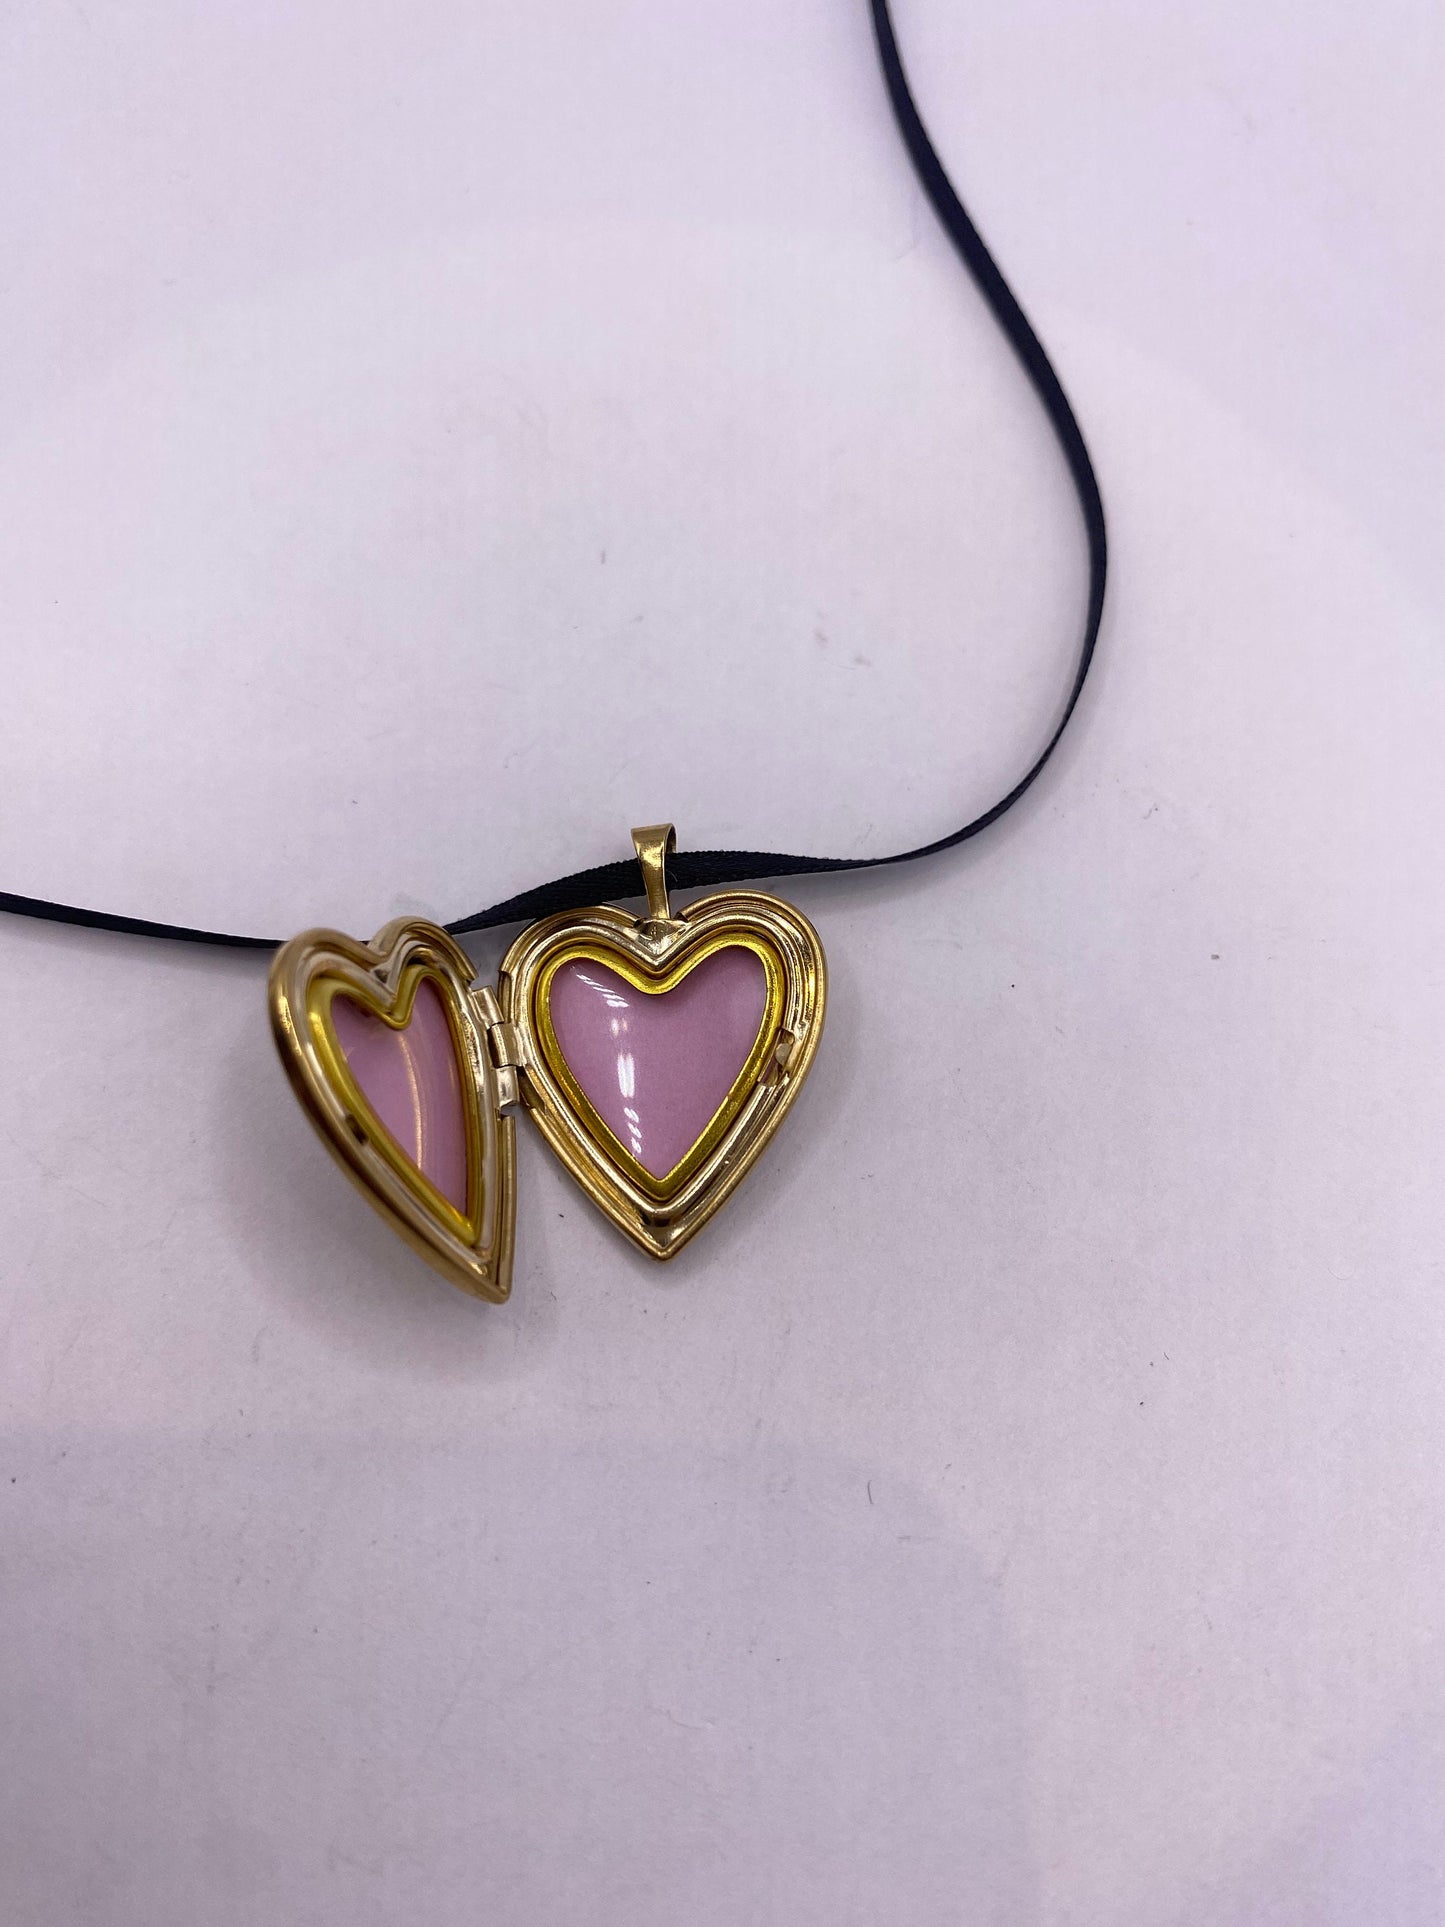 Vintage Gold Locket | Tiny Heart 9k Gold Filled Pendant Photo Memory Charm Engraved Cross Woman Prayer Hands | Choker Necklace